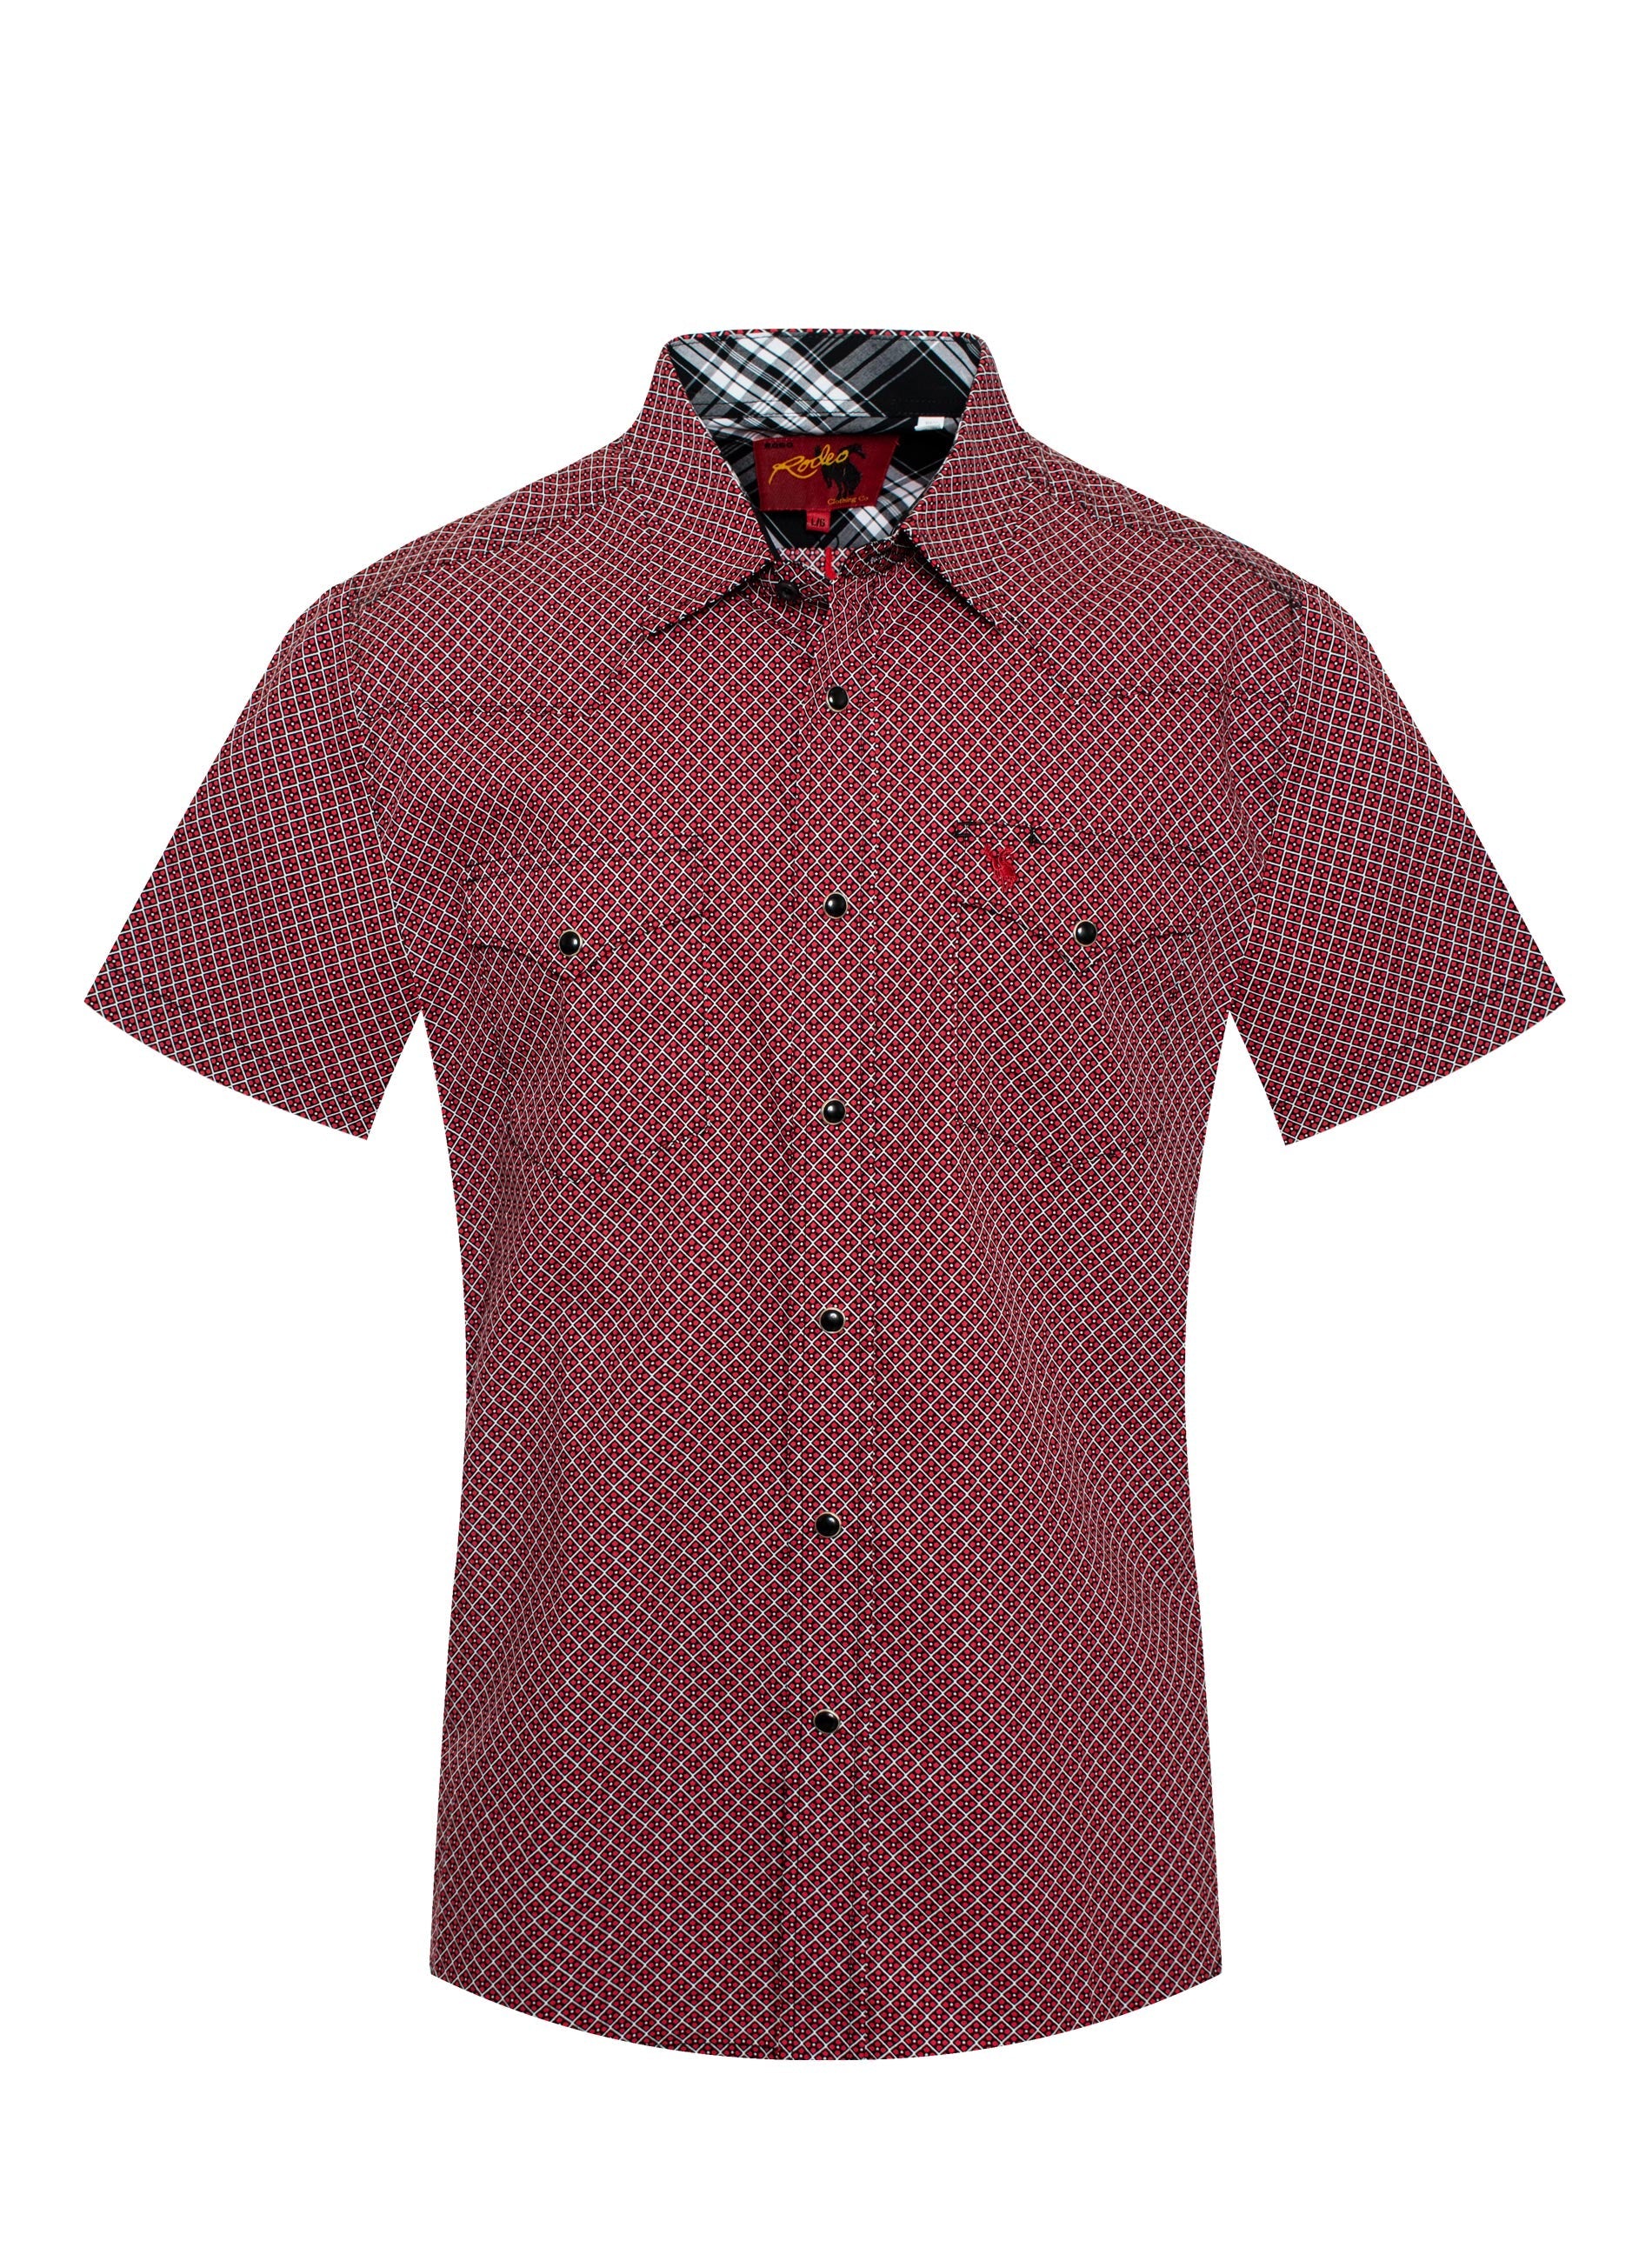 Men's Red Print Short Sleeve Western Shirt